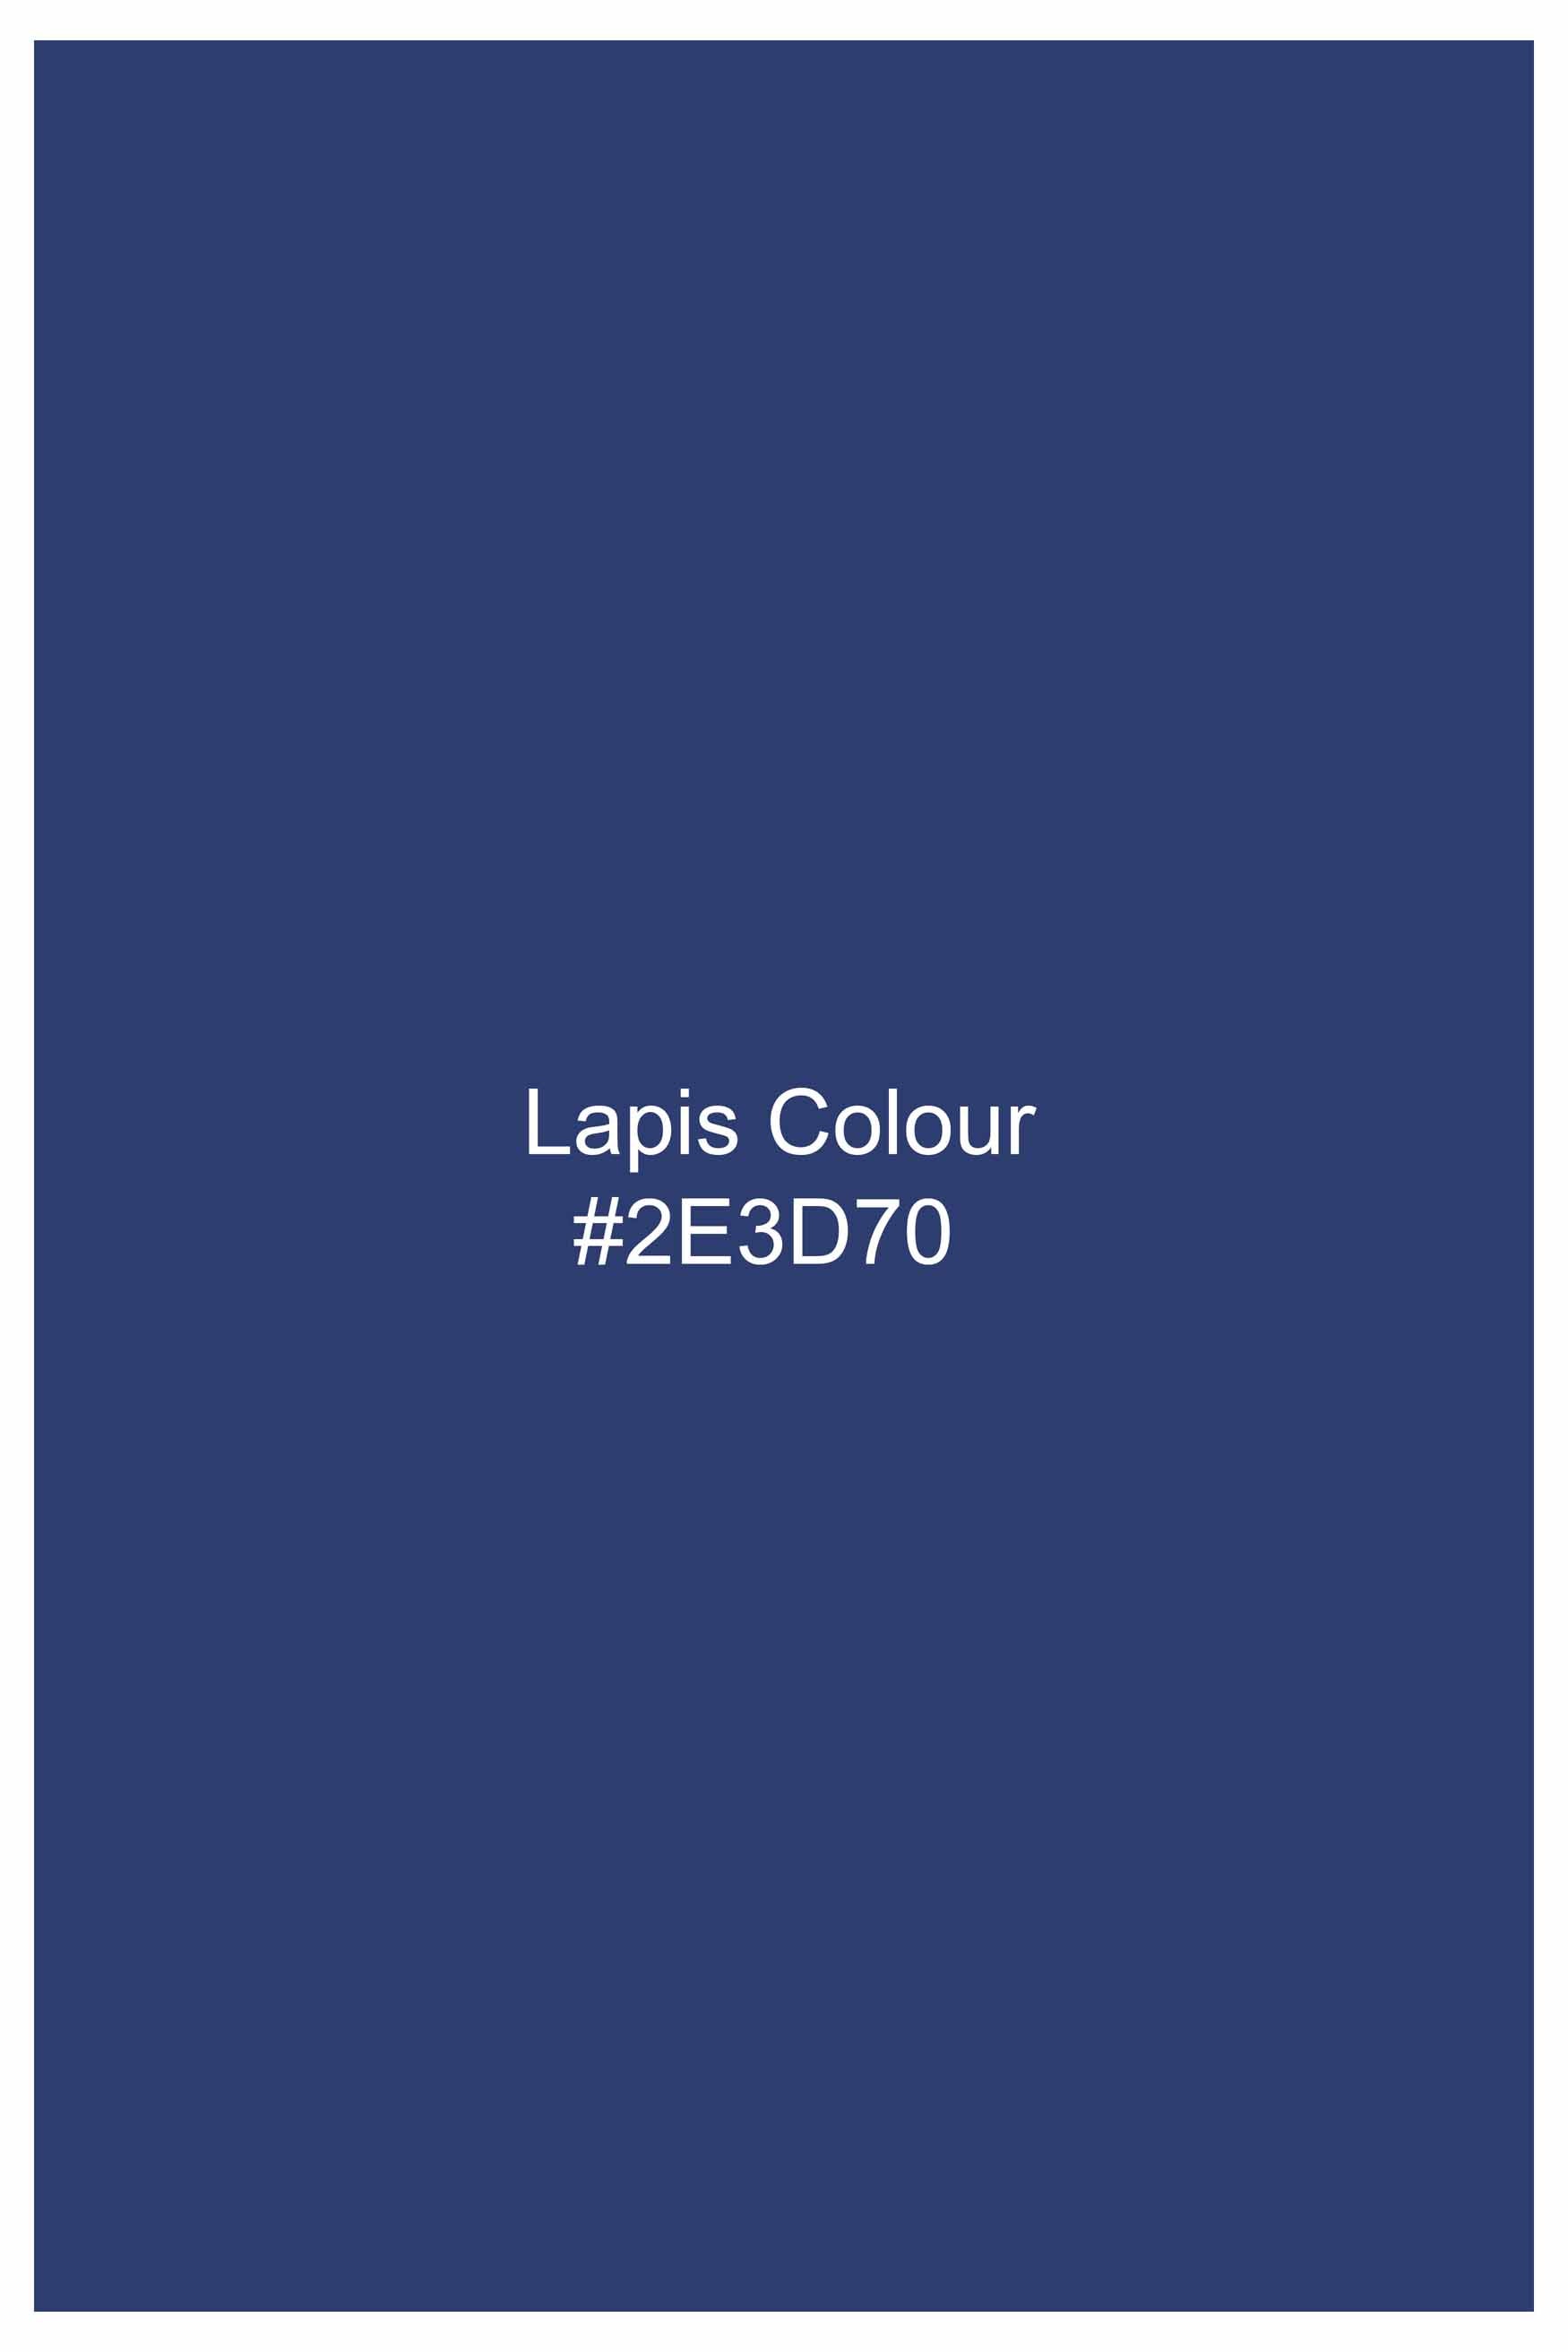 Lapis Blue Jacquard Textured Premium Giza Cotton Shirt